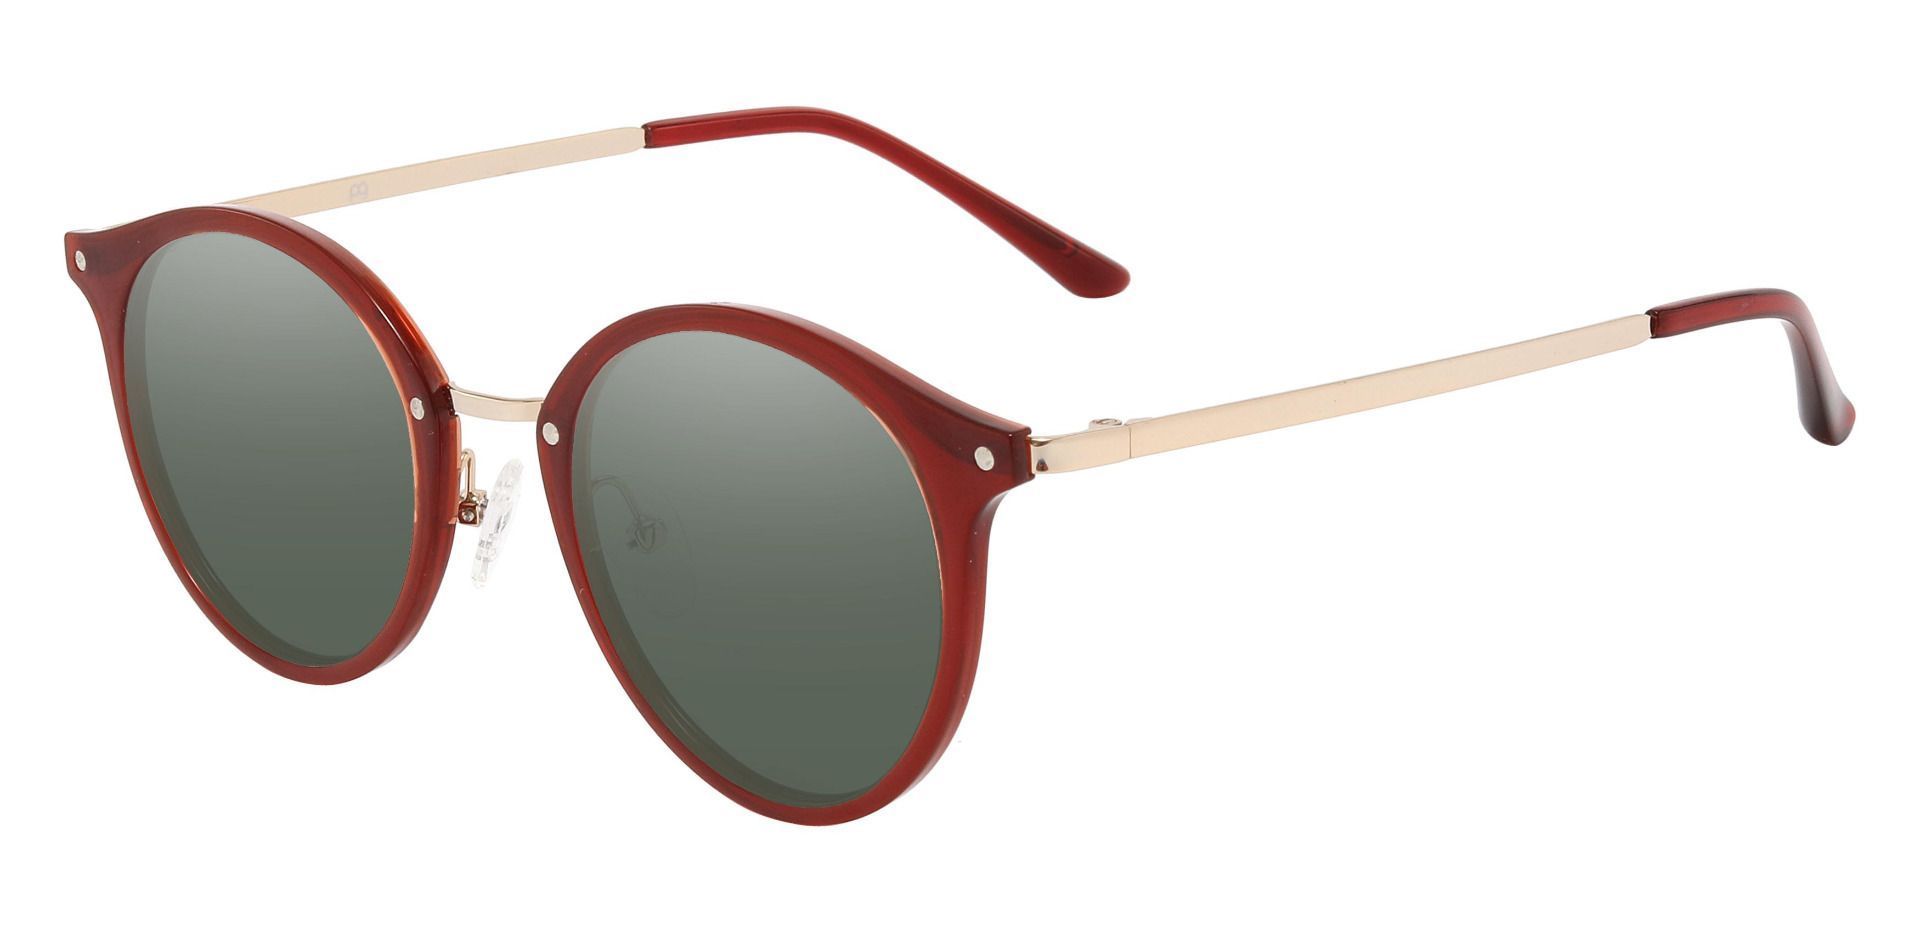 Biloxi Round Prescription Sunglasses - Red Frame With Green Lenses